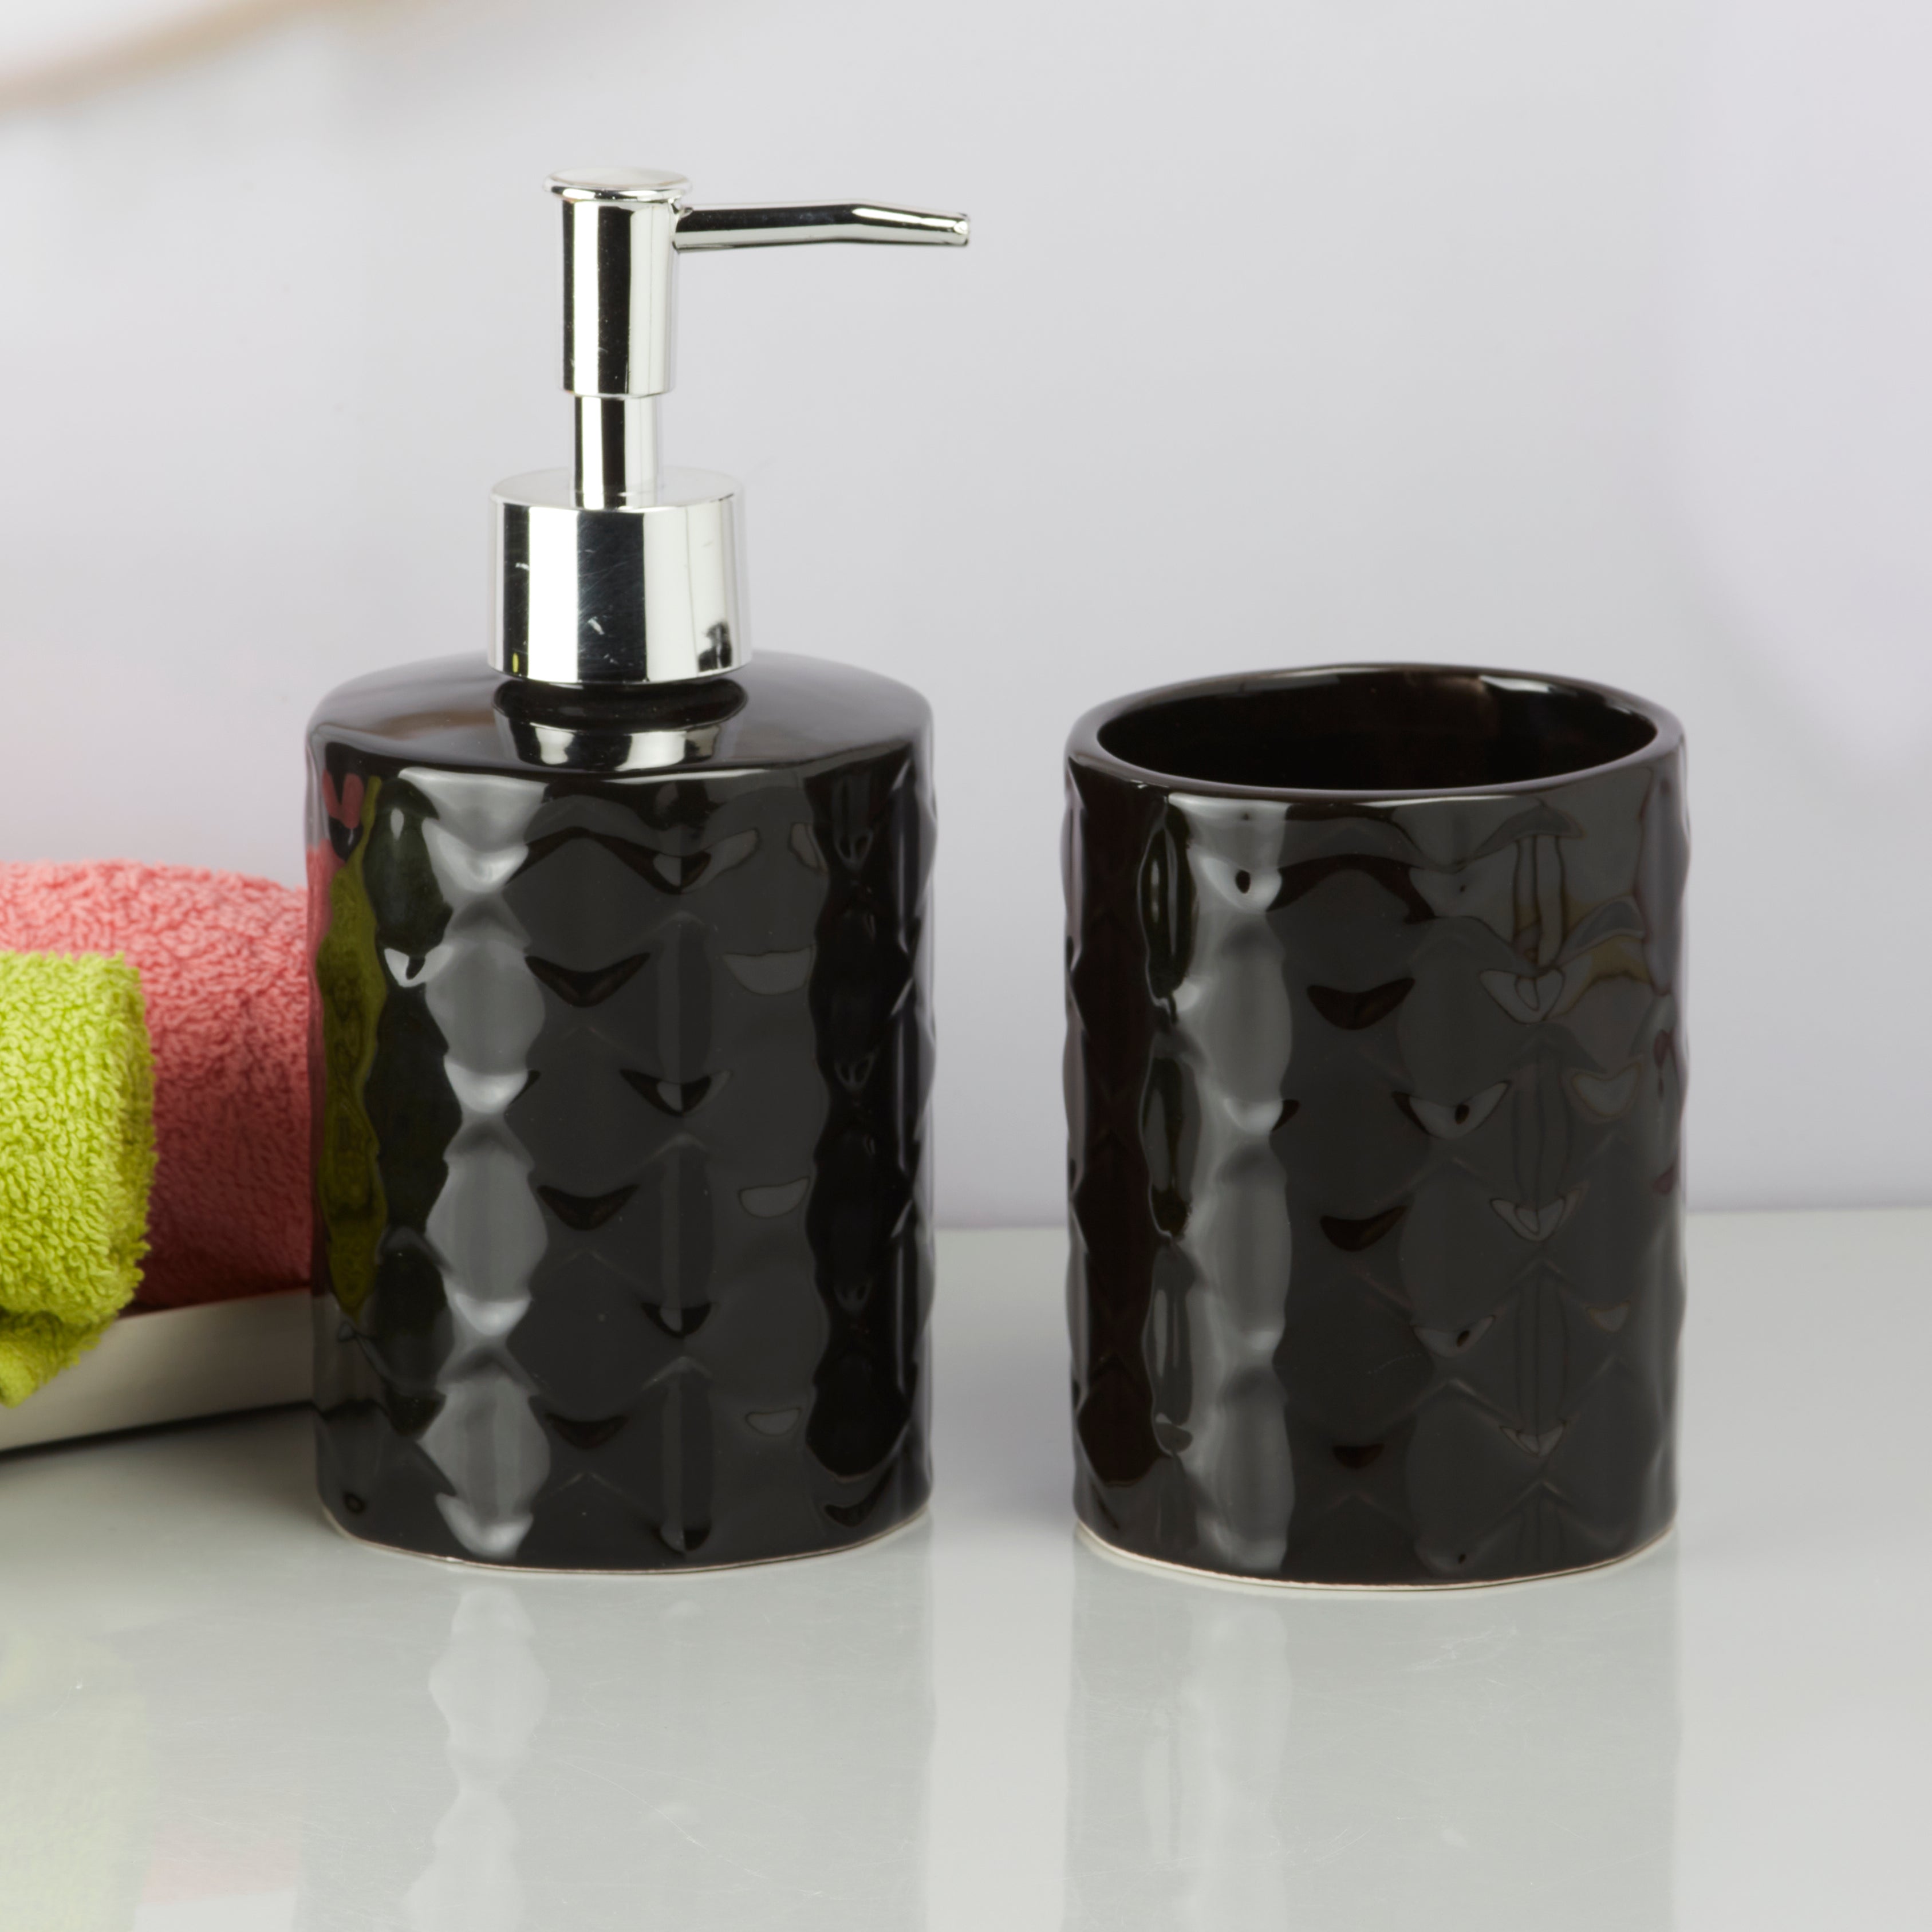 Ceramic Bathroom Accessories Set of 2 Bath Set with Soap Dispenser (9720)